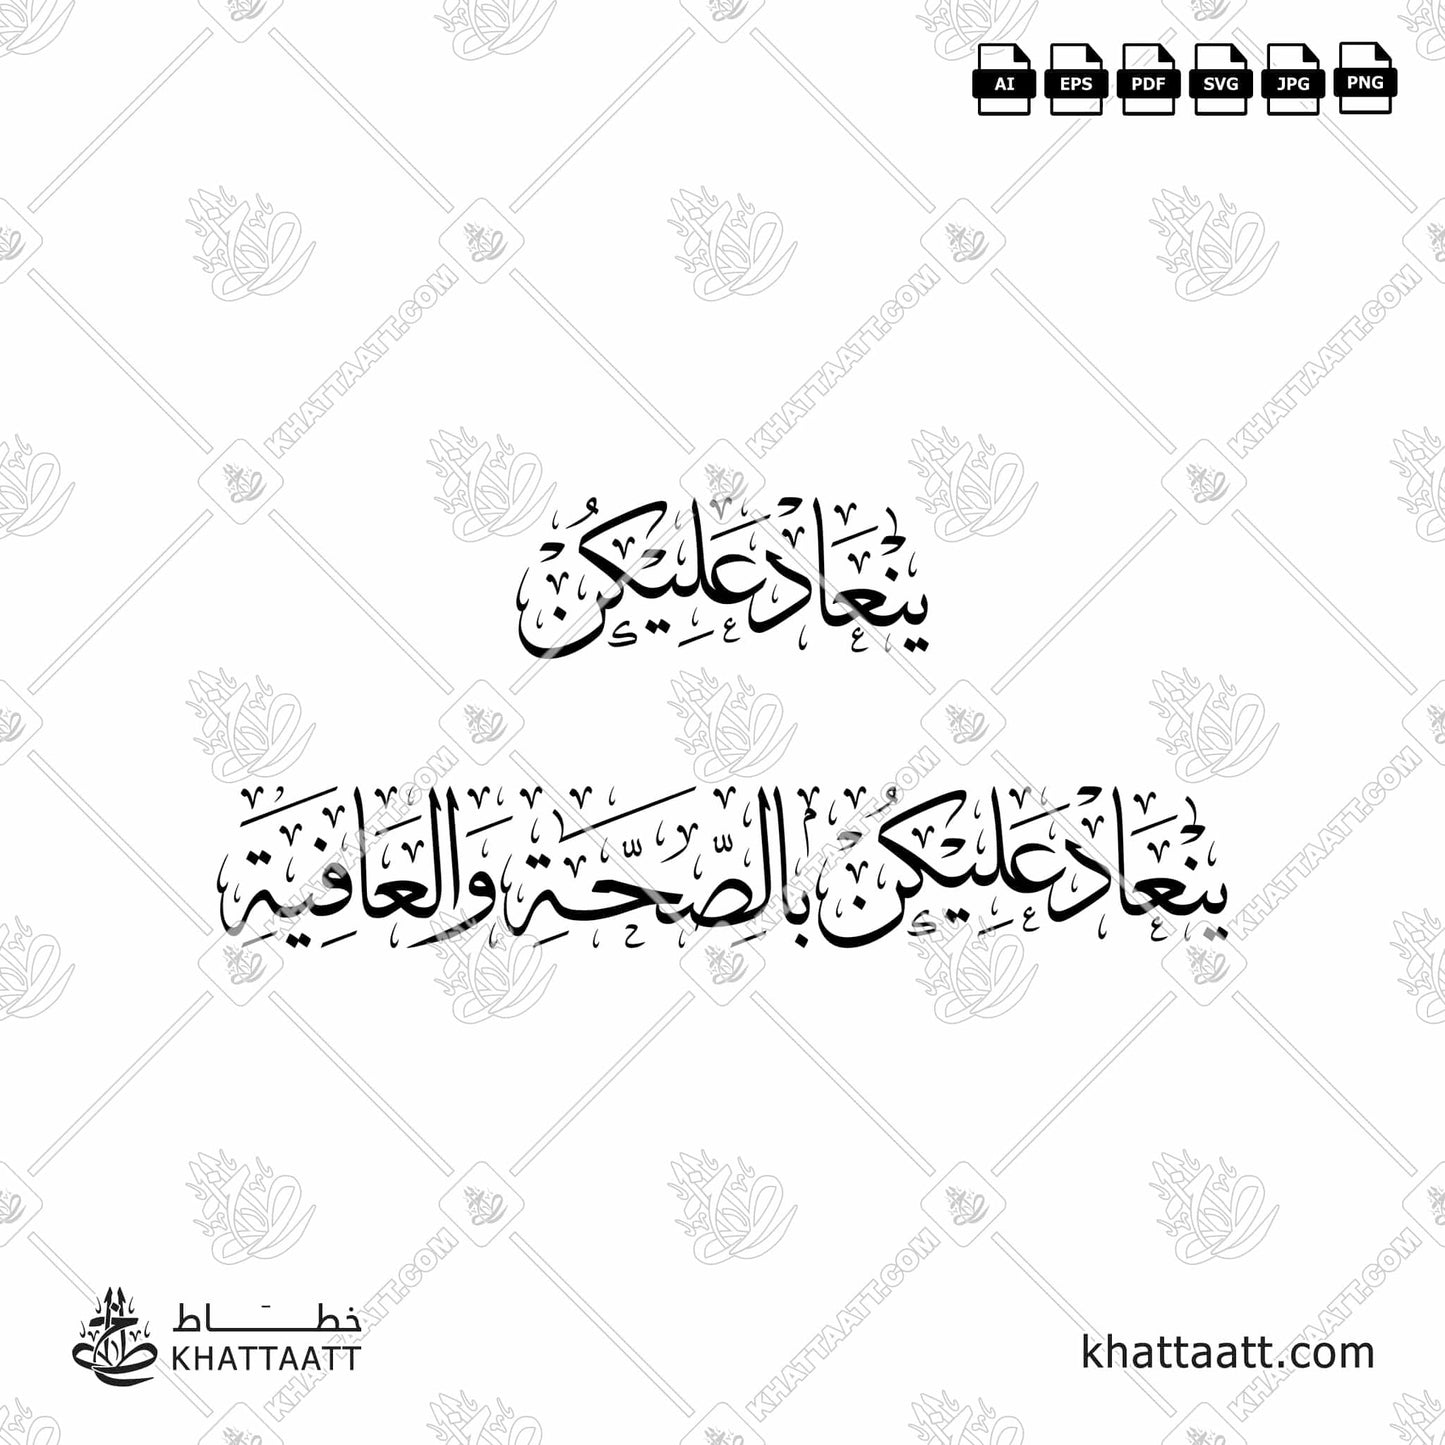 Download Arabic calligraphy تحميل مخطوطة خط عربي of ينعاد عليكن بالصحة والعافية (T041) Thuluth - خط الثلث in vector فيكتور and png